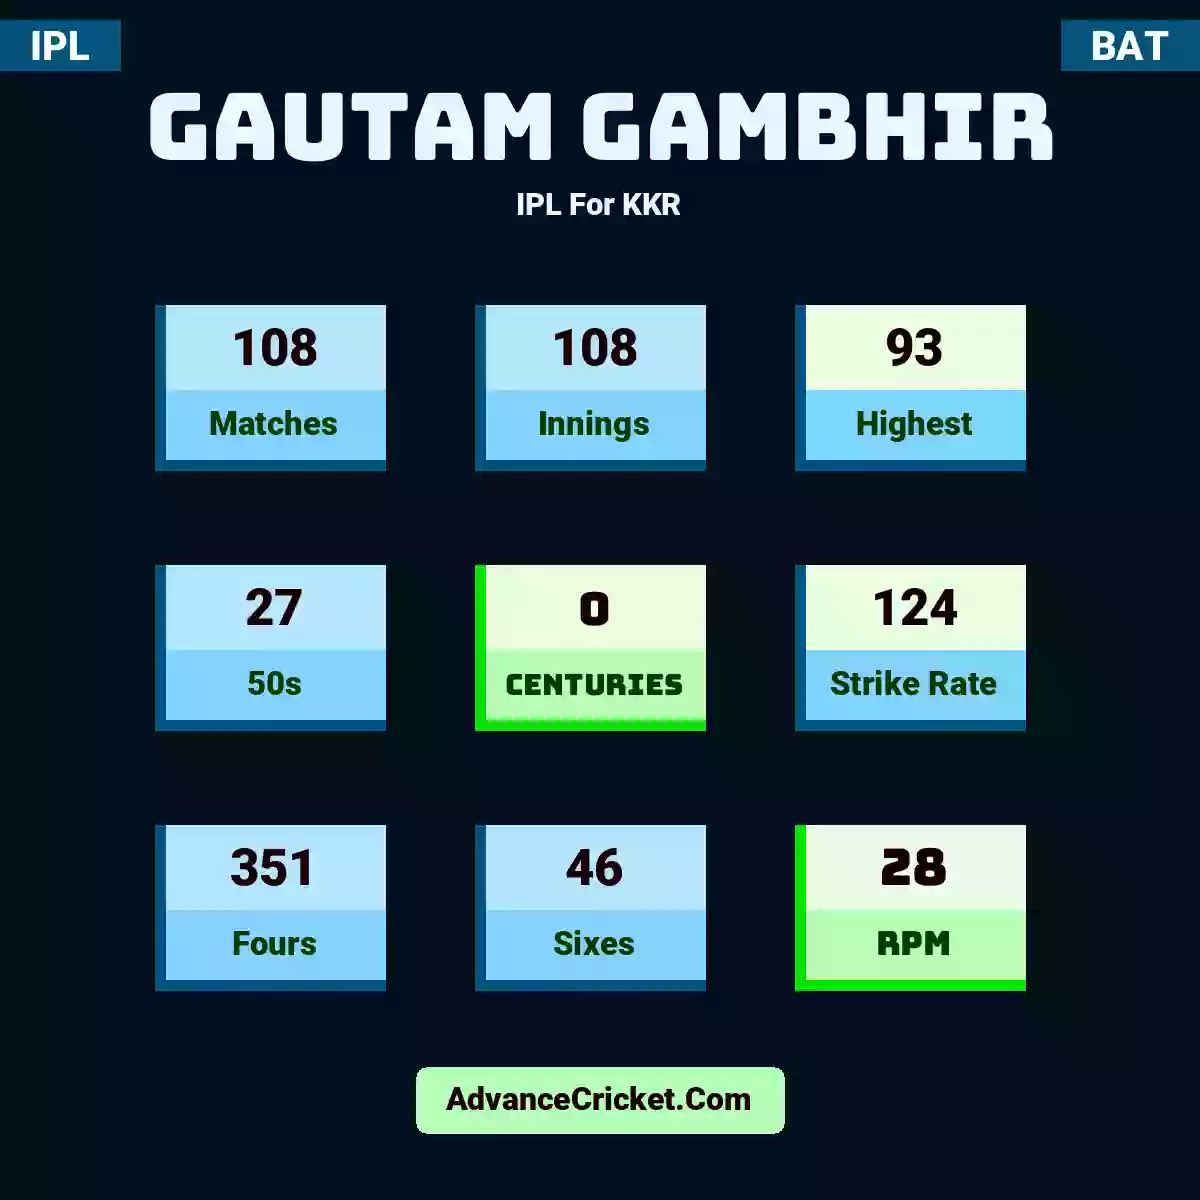 Gautam Gambhir IPL  For KKR, Gautam Gambhir played 108 matches, scored 93 runs as highest, 27 half-centuries, and 0 centuries, with a strike rate of 124. G.Gambhir hit 351 fours and 46 sixes, with an RPM of 28.